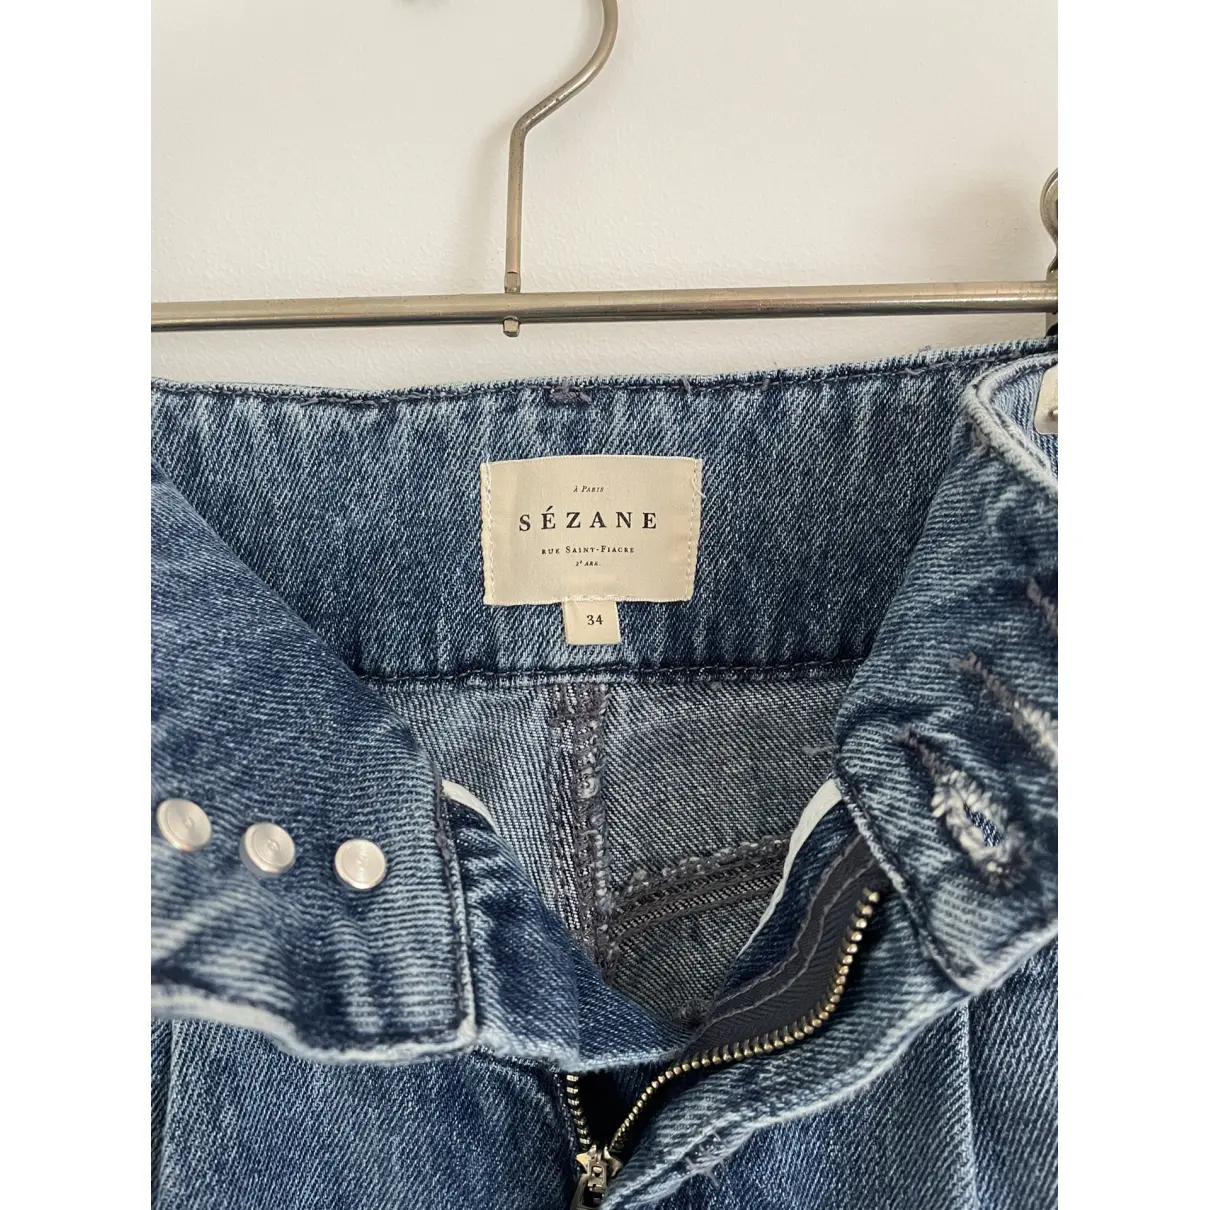 Buy Sézane Spring Summer 2020 slim jeans online